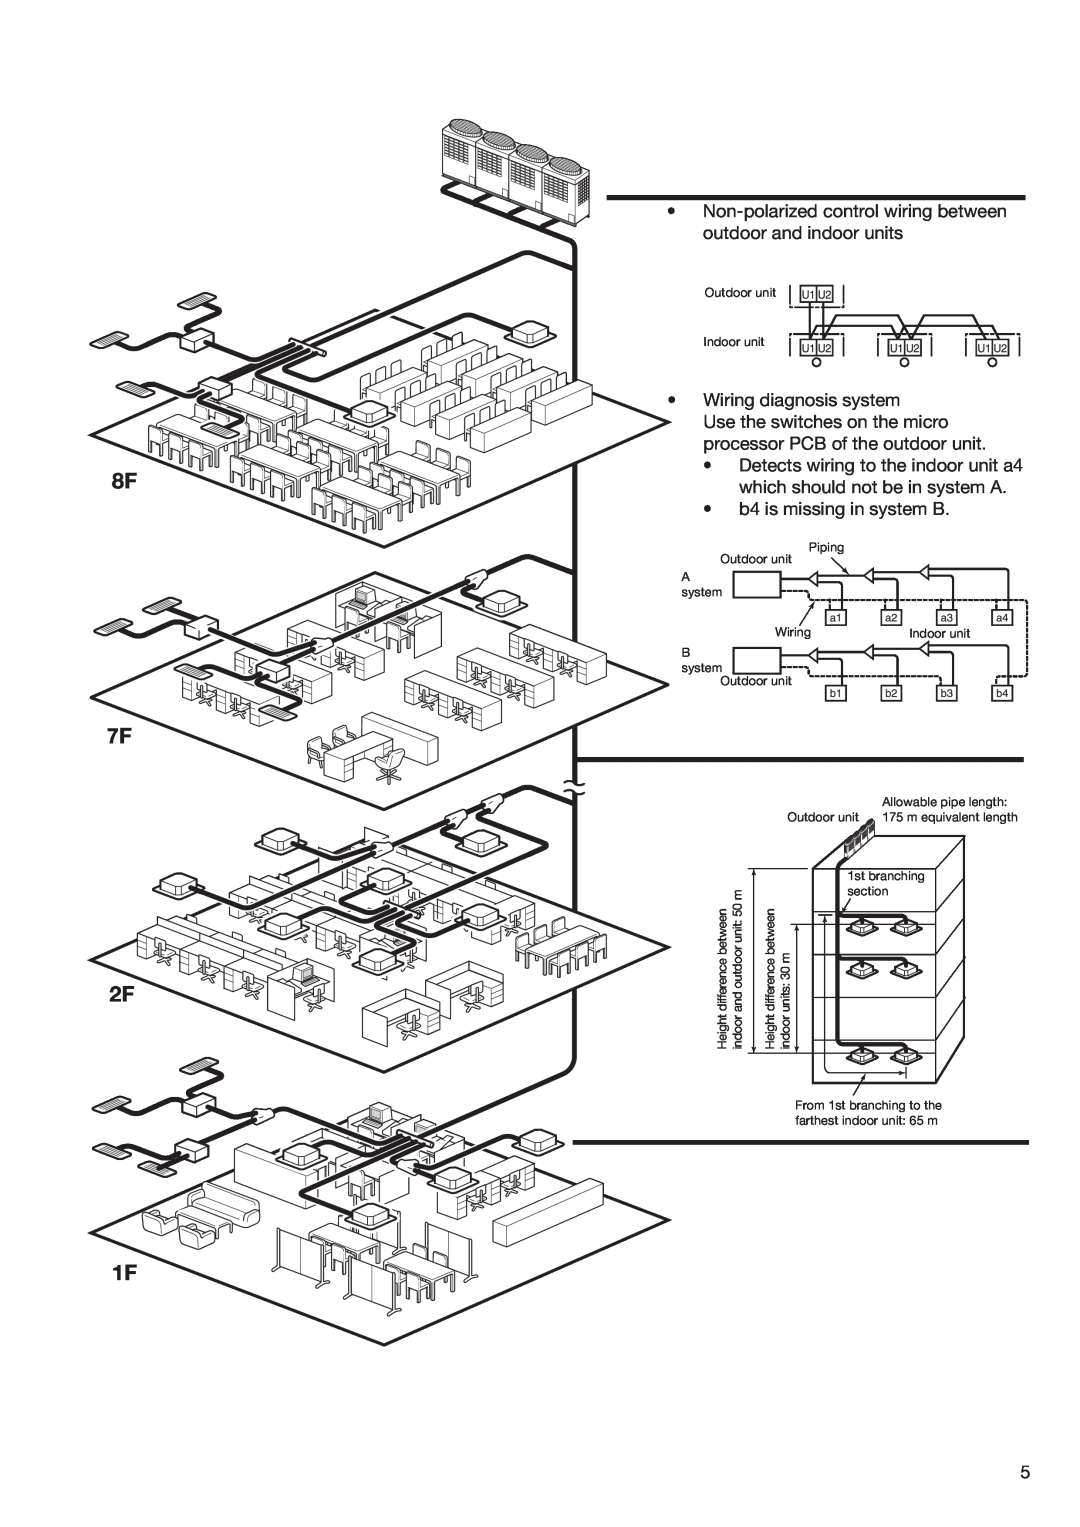 Toshiba HFC R-410A manual 8F 7F 2F 1F, •Wiring diagnosis system 